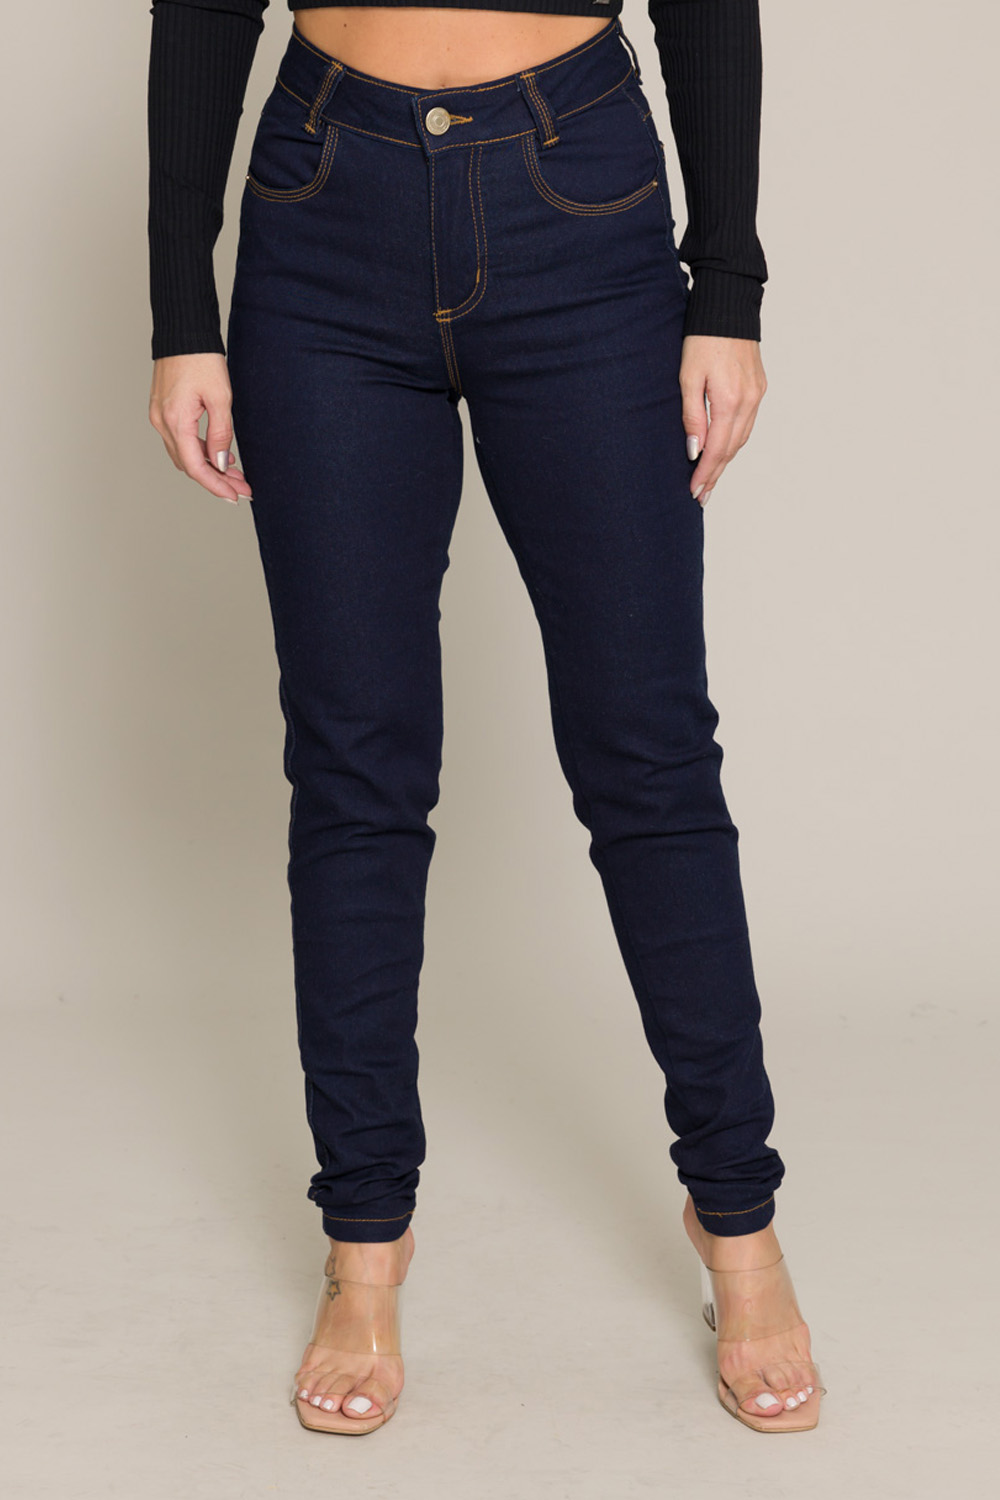 Calça Jeans Skinny Basic 11643 - Jeans Amaciado